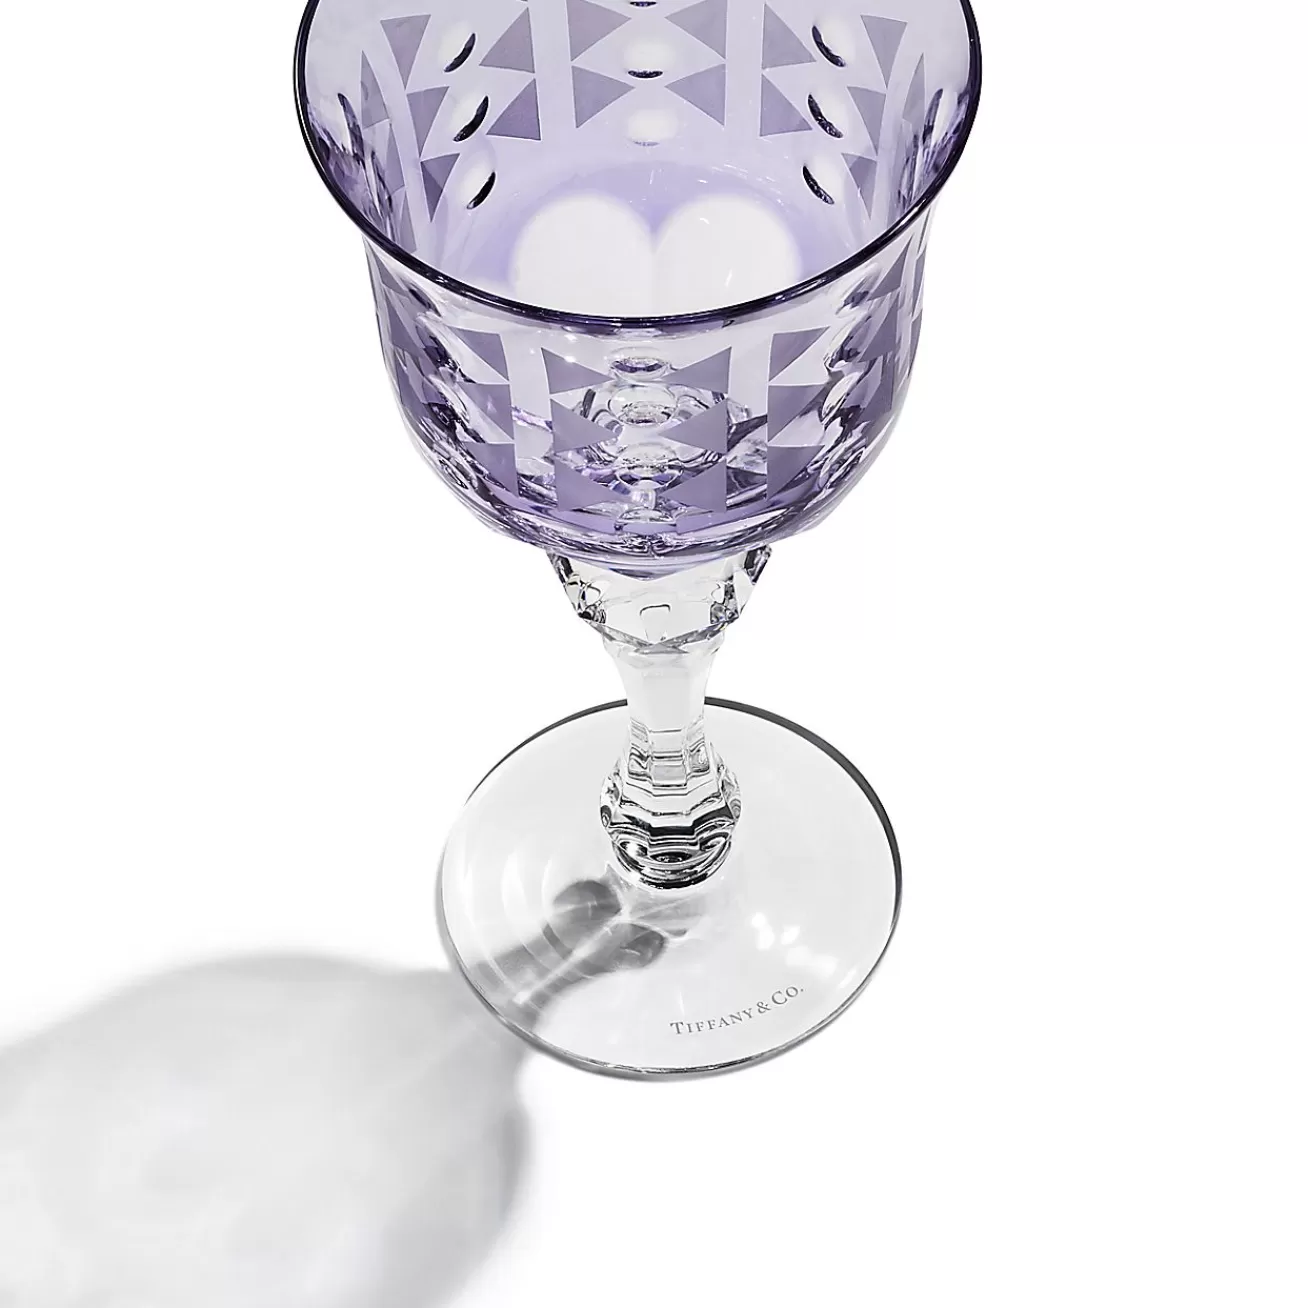 Tiffany & Co. Tiffany Berries White Wine Glass in Amethyst Purple Lead Crystal | ^ Glassware & Barware | Bar & Drinkware